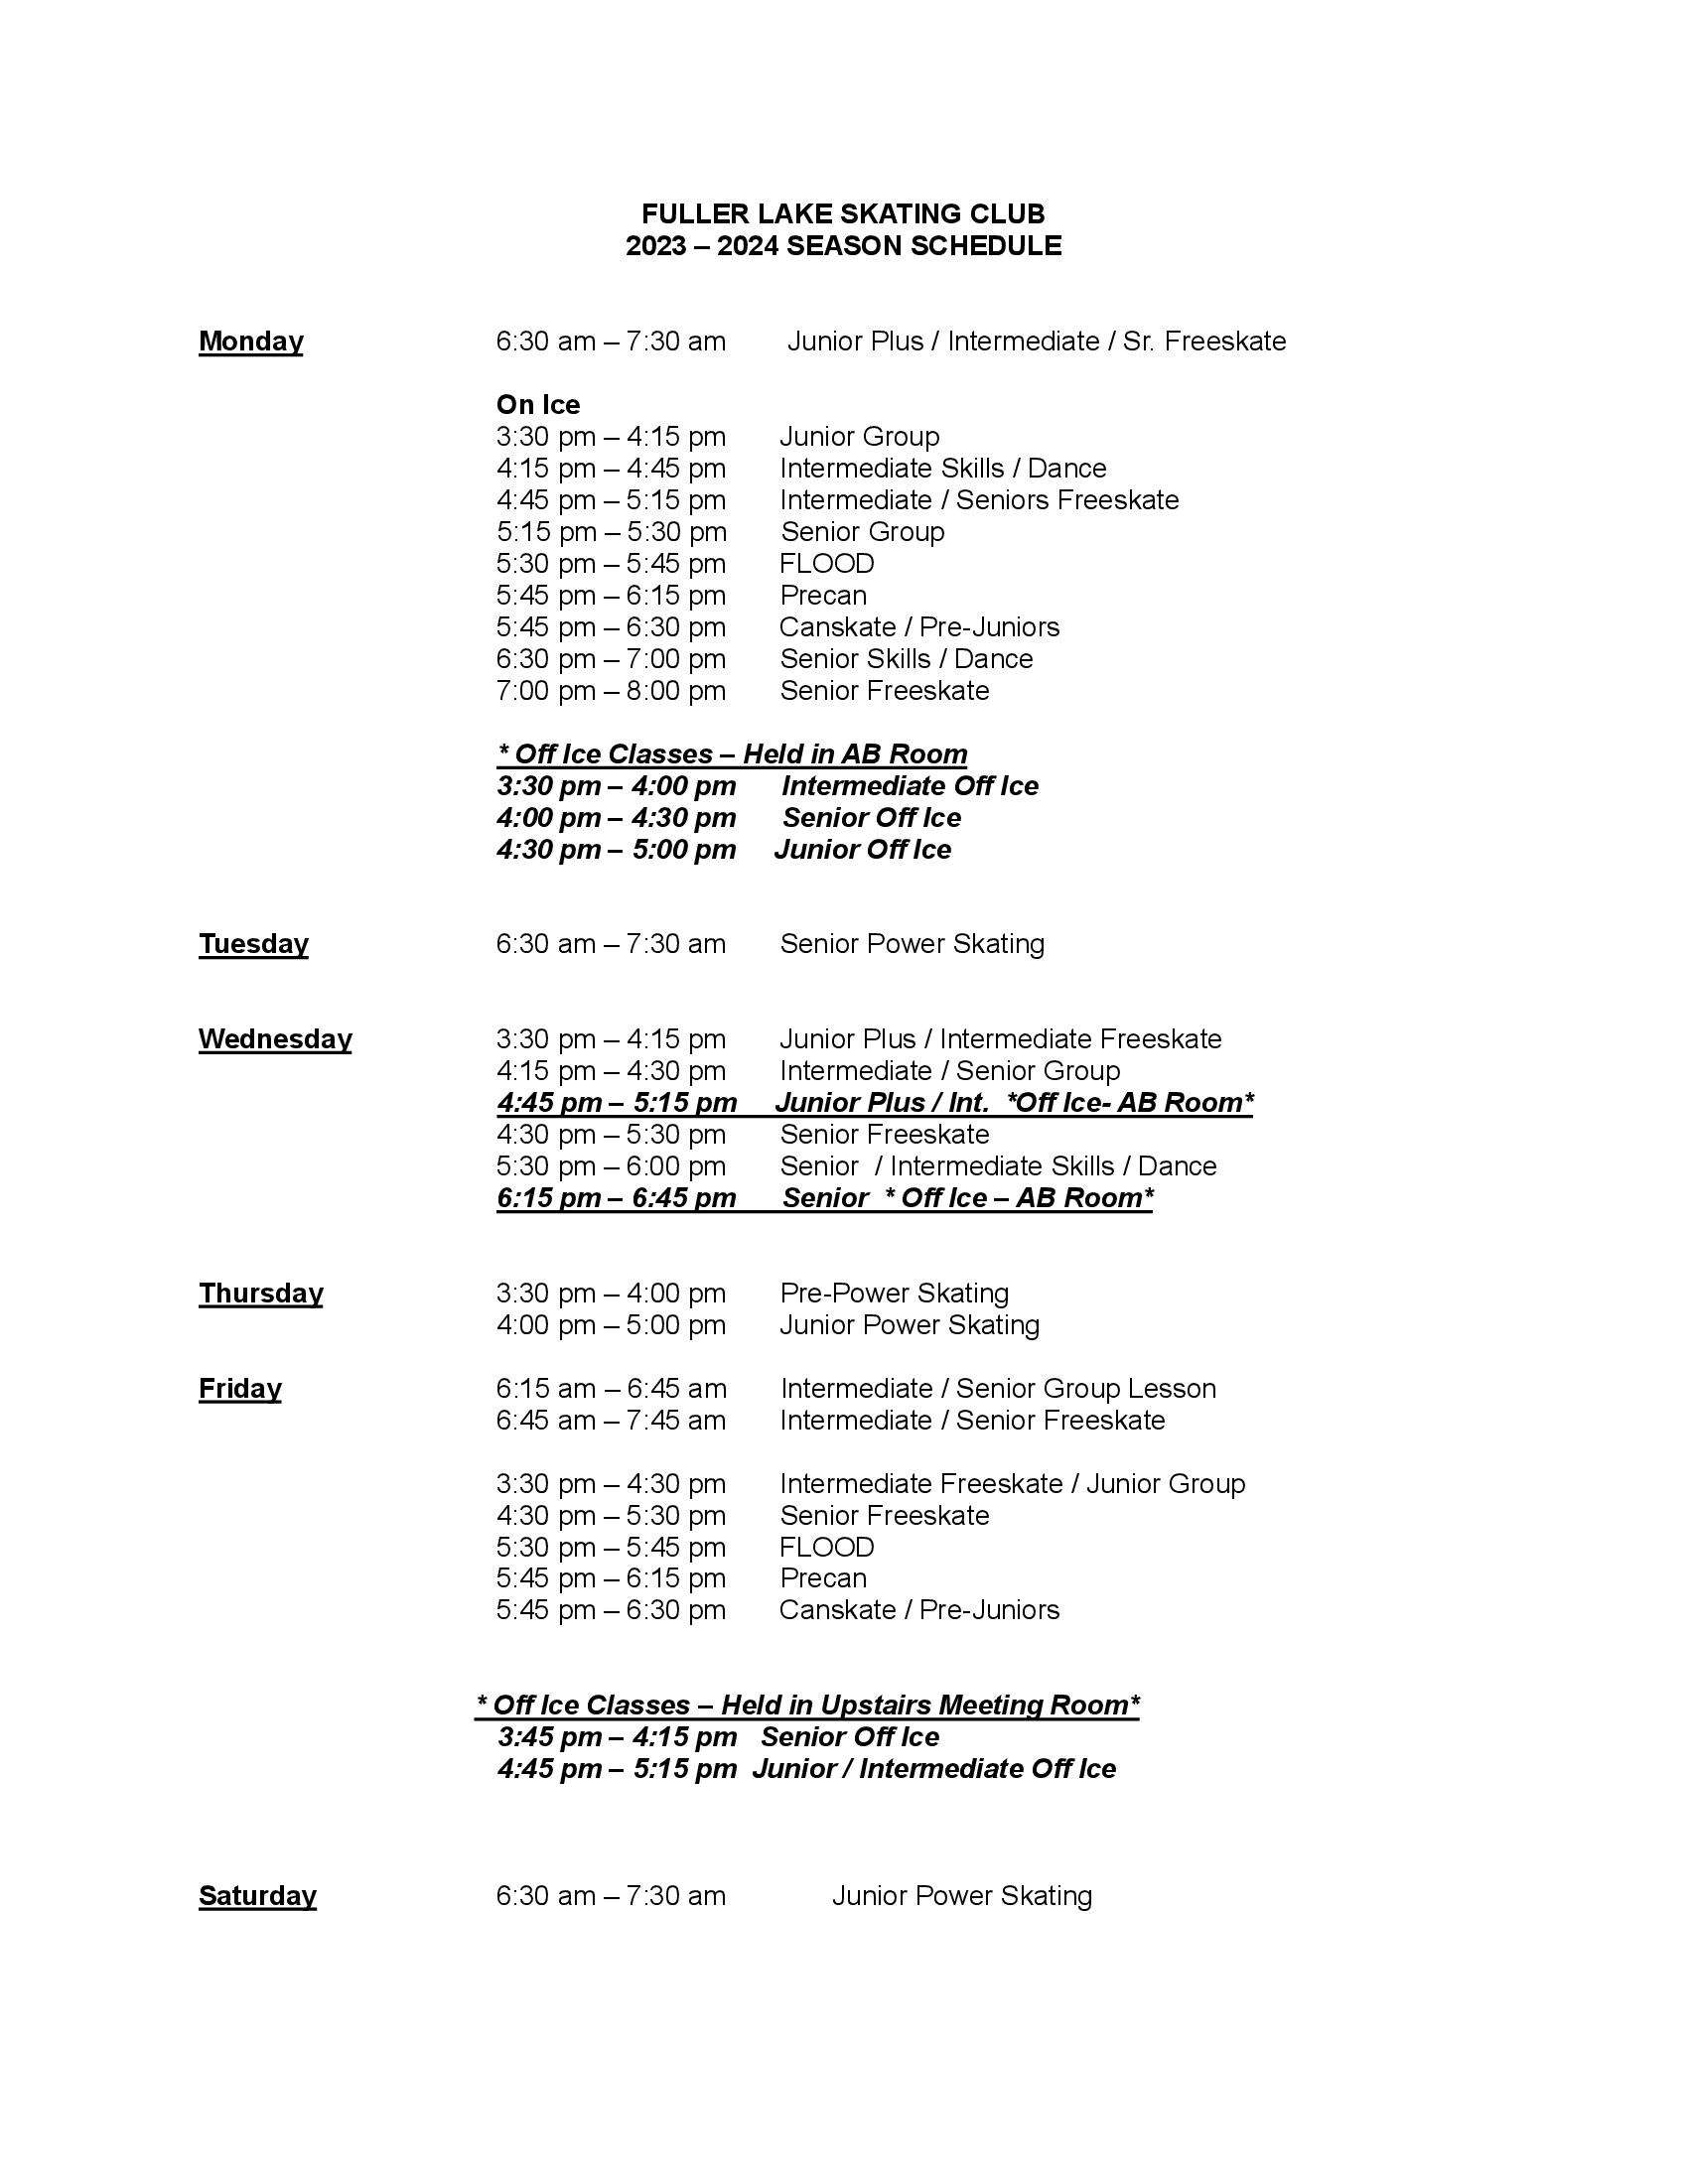 23/24 Season Schedule